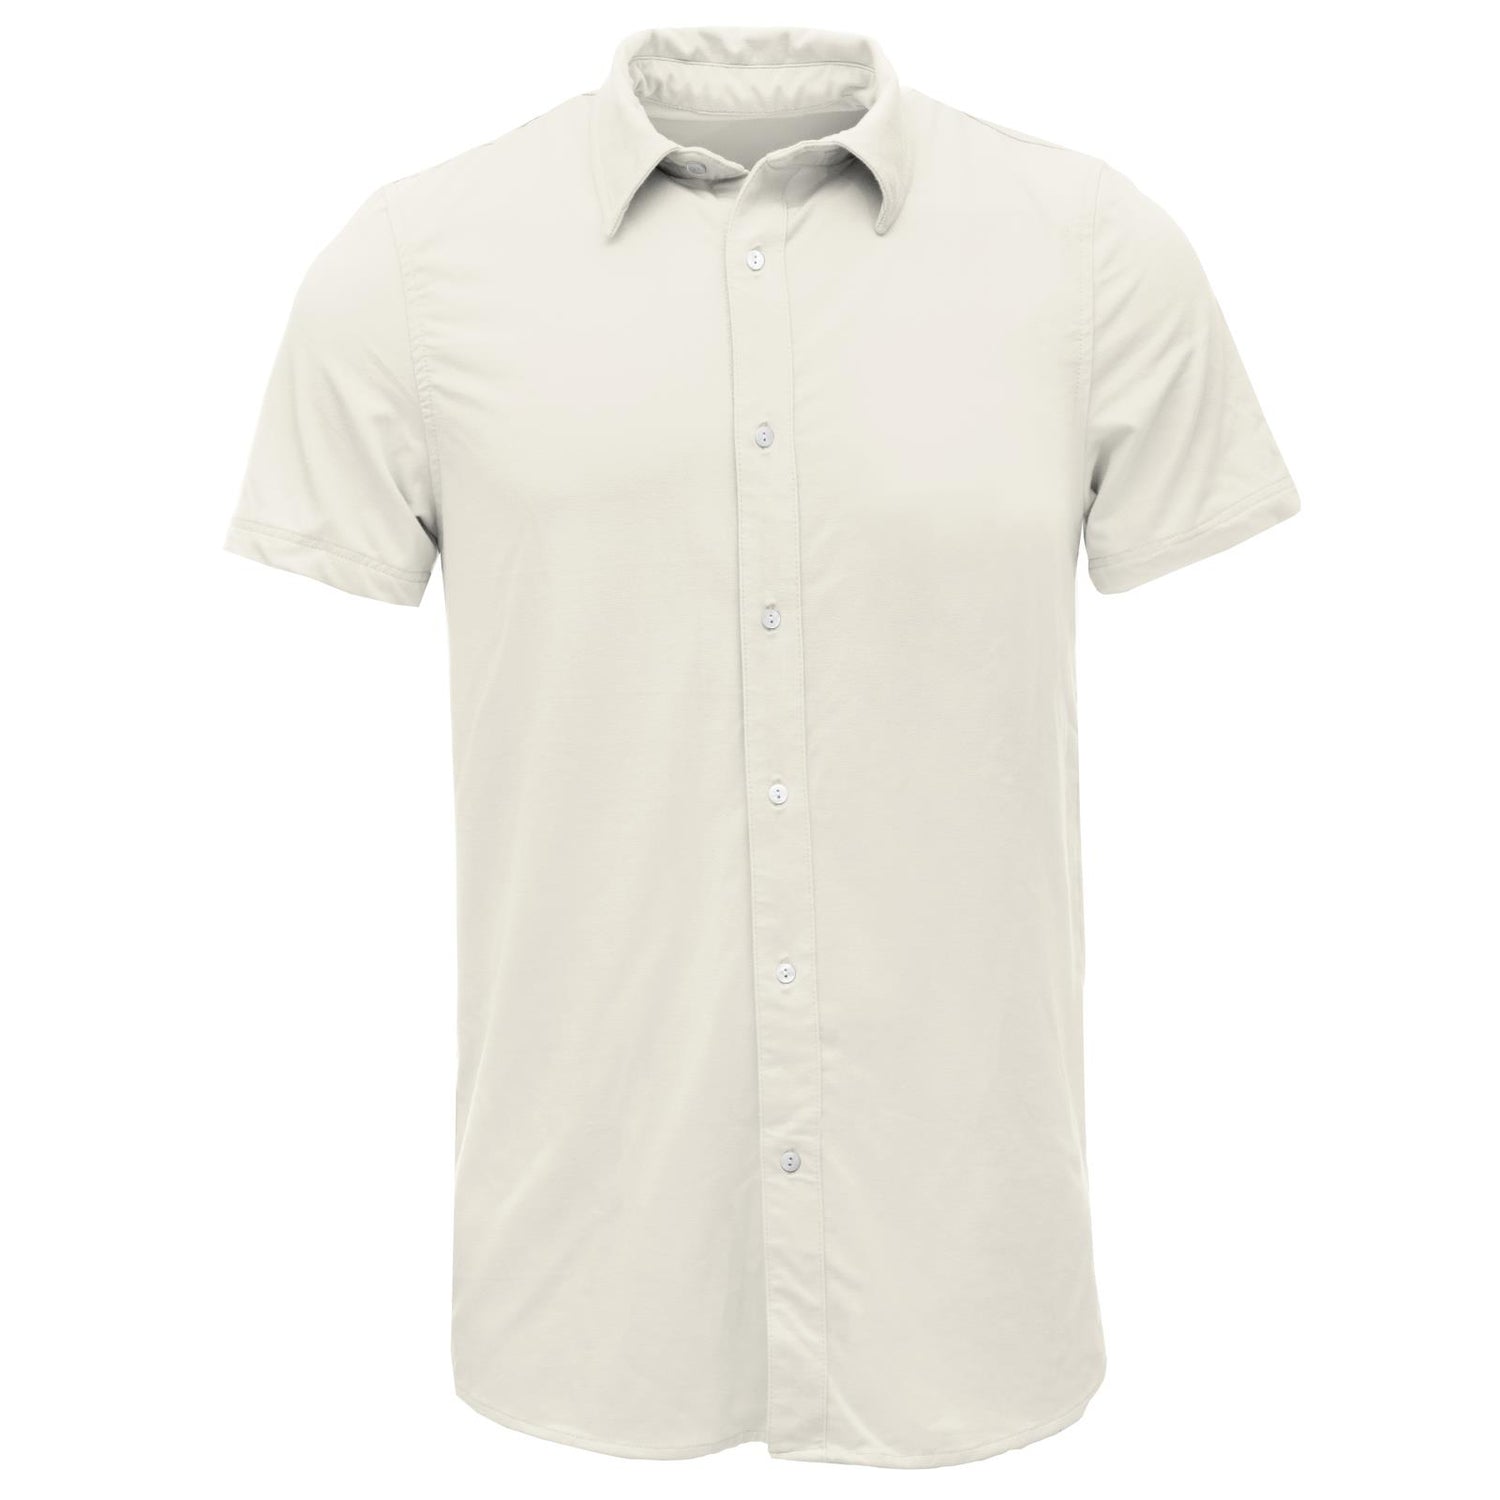 Men's Short Sleeve Woven Button Down Shirt in Natural